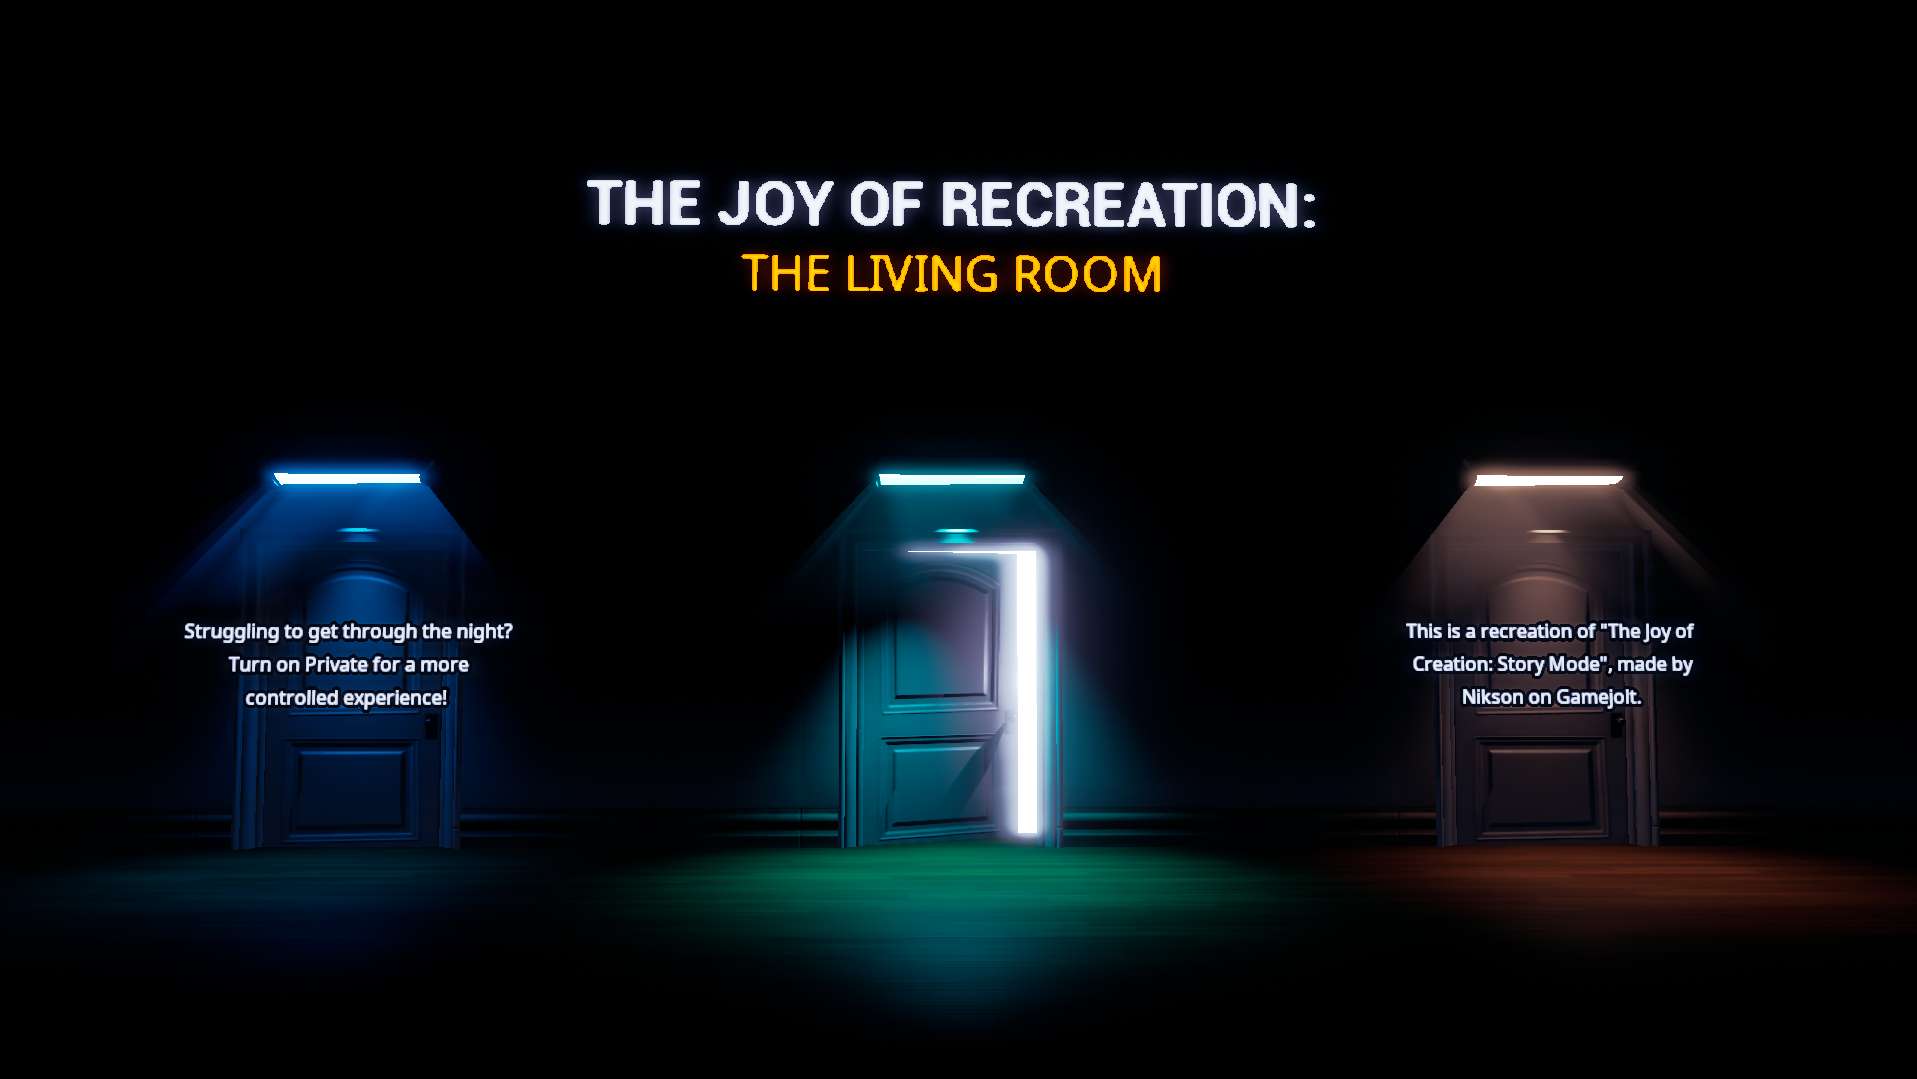 The Joy of Recreation: The Living Room - Fortnite Creative Map Code -  Dropnite